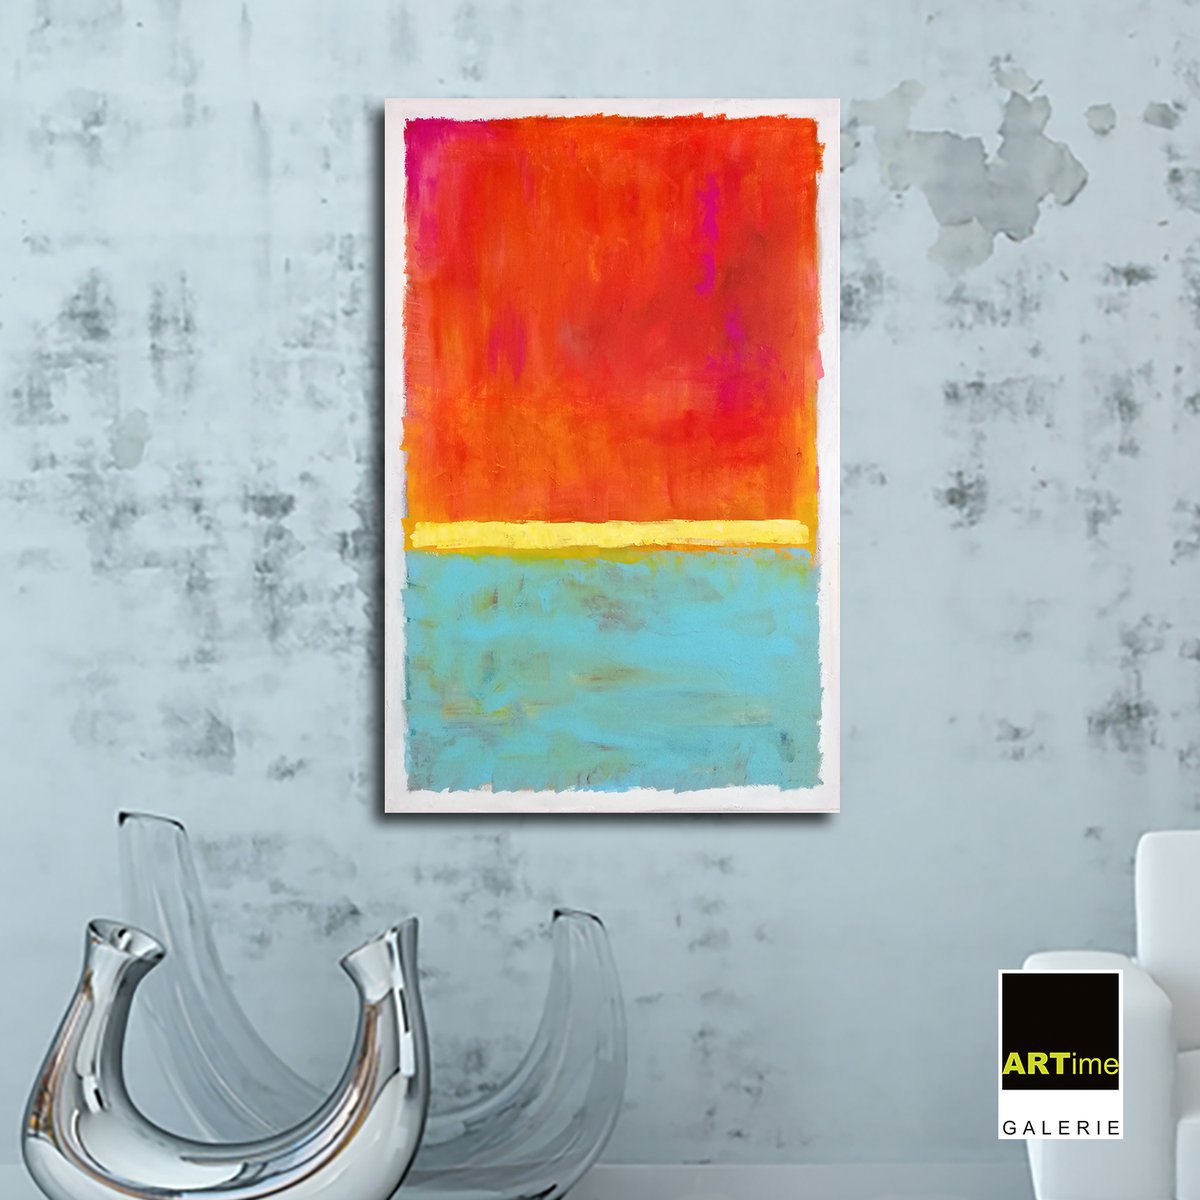 'Tres colores' Acryl-, Mischtechnik auf Leinwand in 80 x 125 cm | #moderneMalerei | abstrakter Expressionismus | Farbfeldmalerei | #modernegemälde  #bezahlbarekunst  | ARTime #GalerieFrankfurt